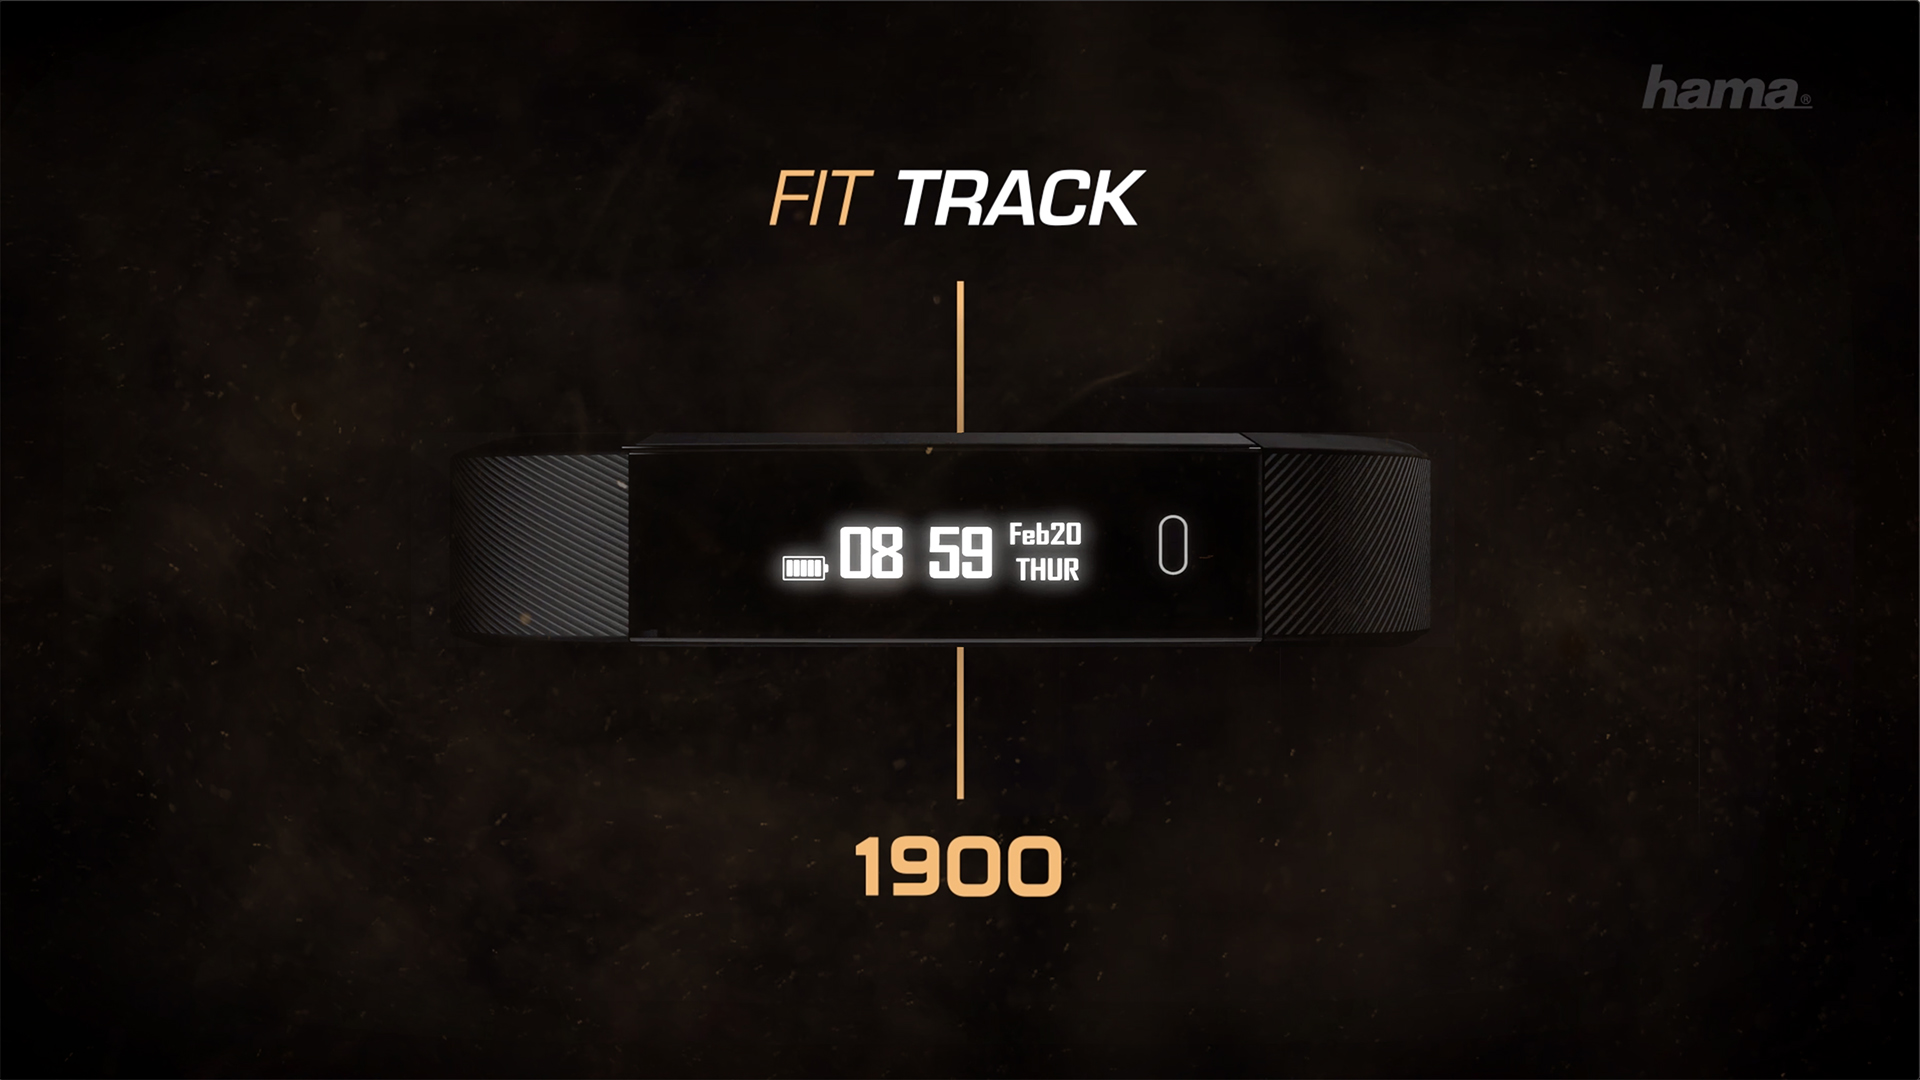 Hama "Fit Track 1900" Fitness Tracker